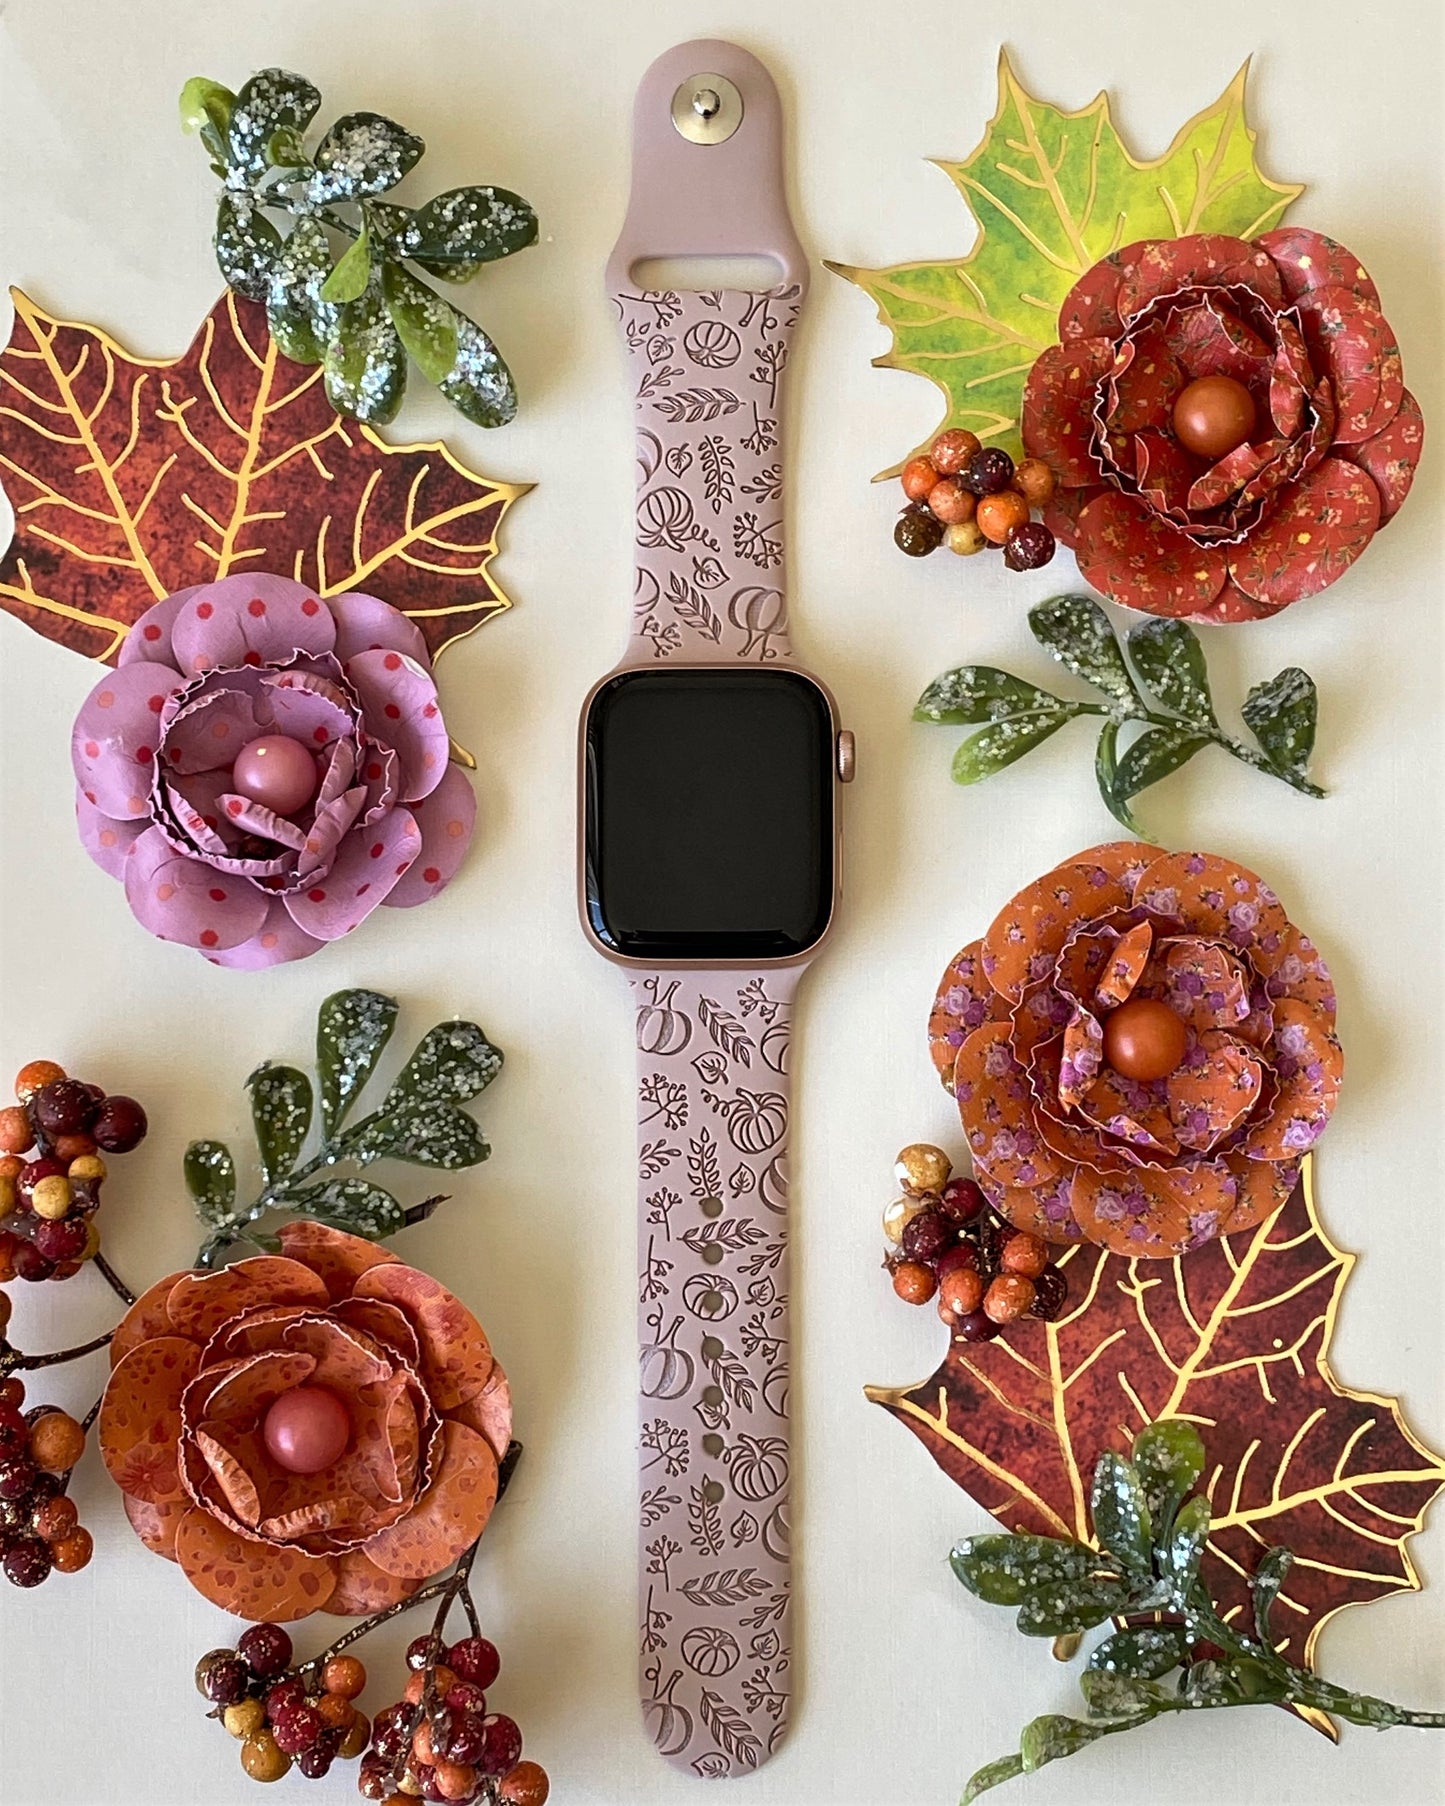 Autumn Apple Watch Band